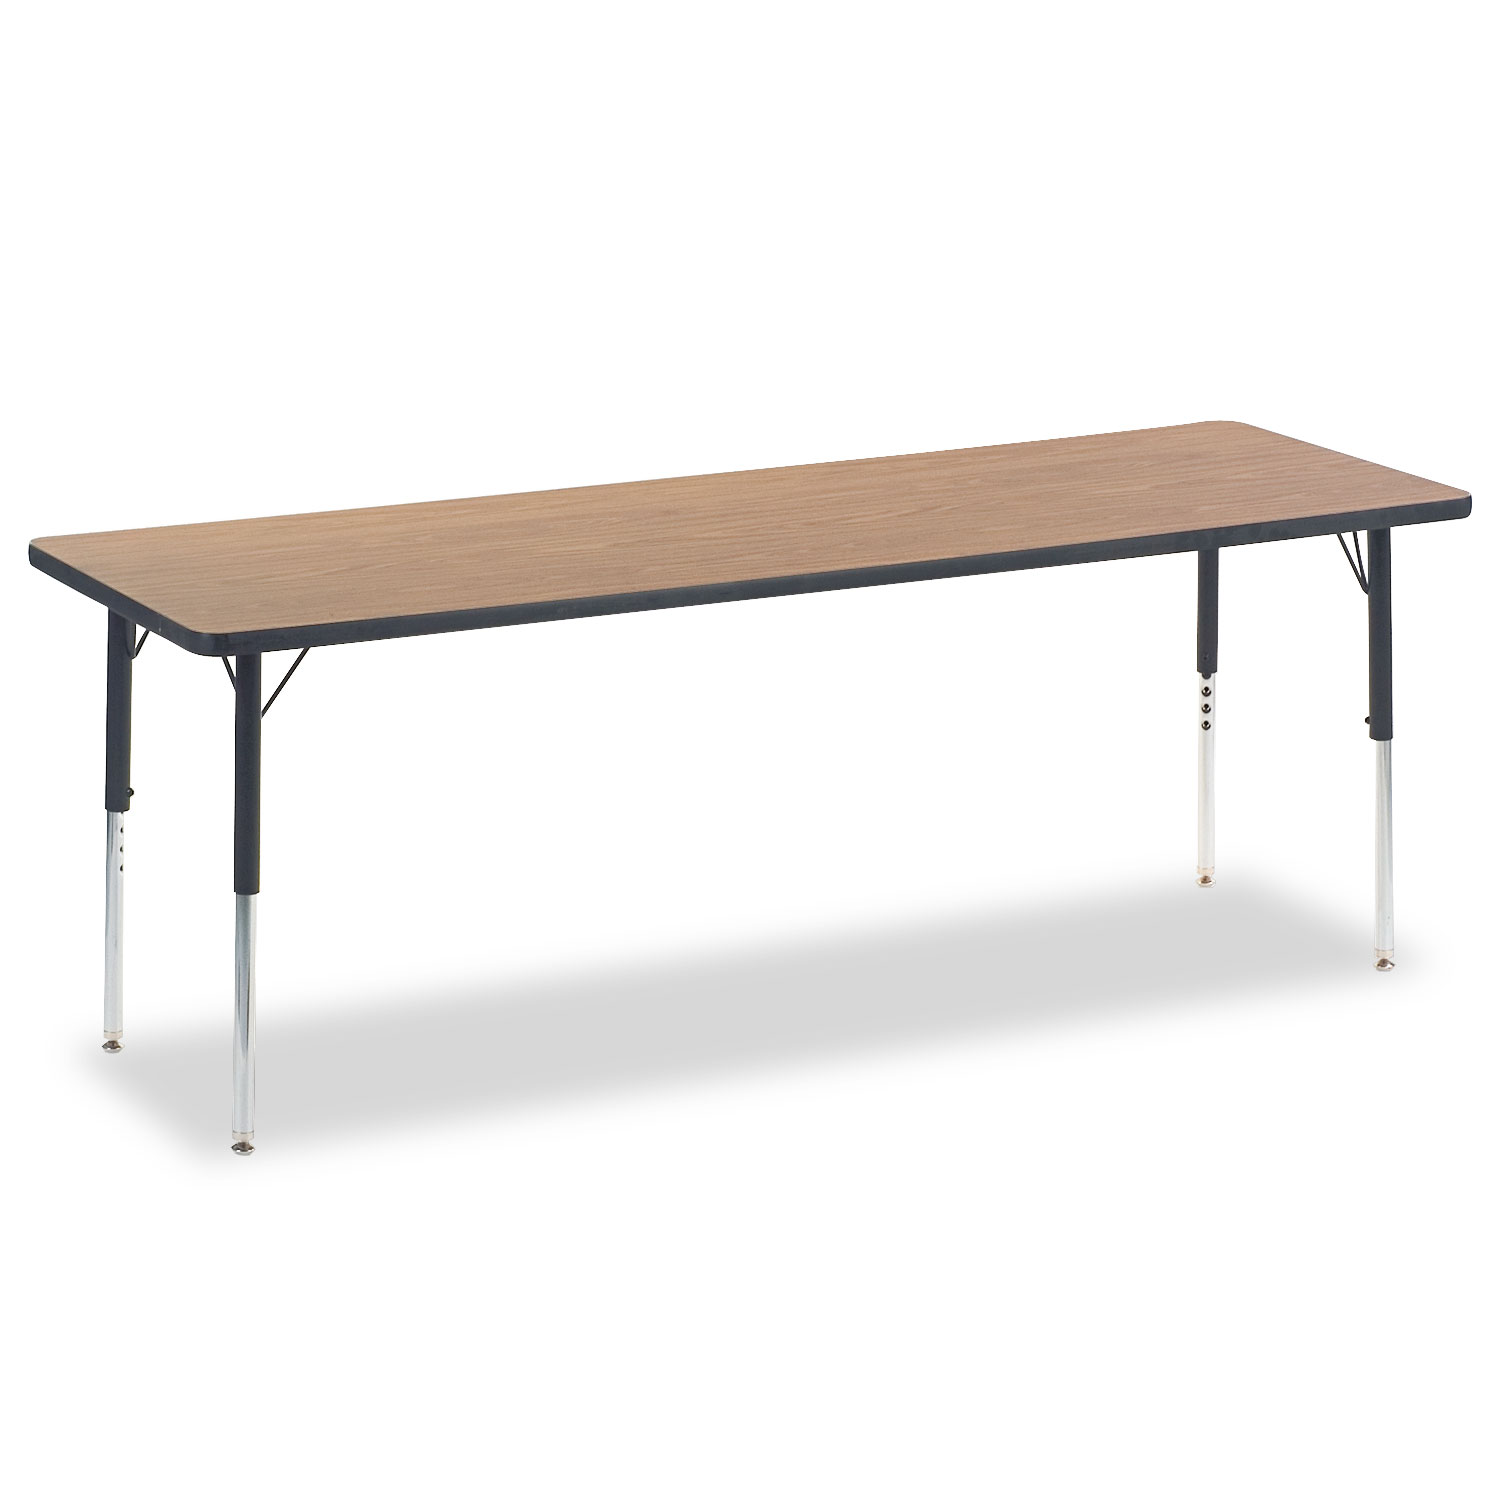 4000 Series Rectangular Activity Table, 24w x 72d x 30h, Medium Oak/Chrome